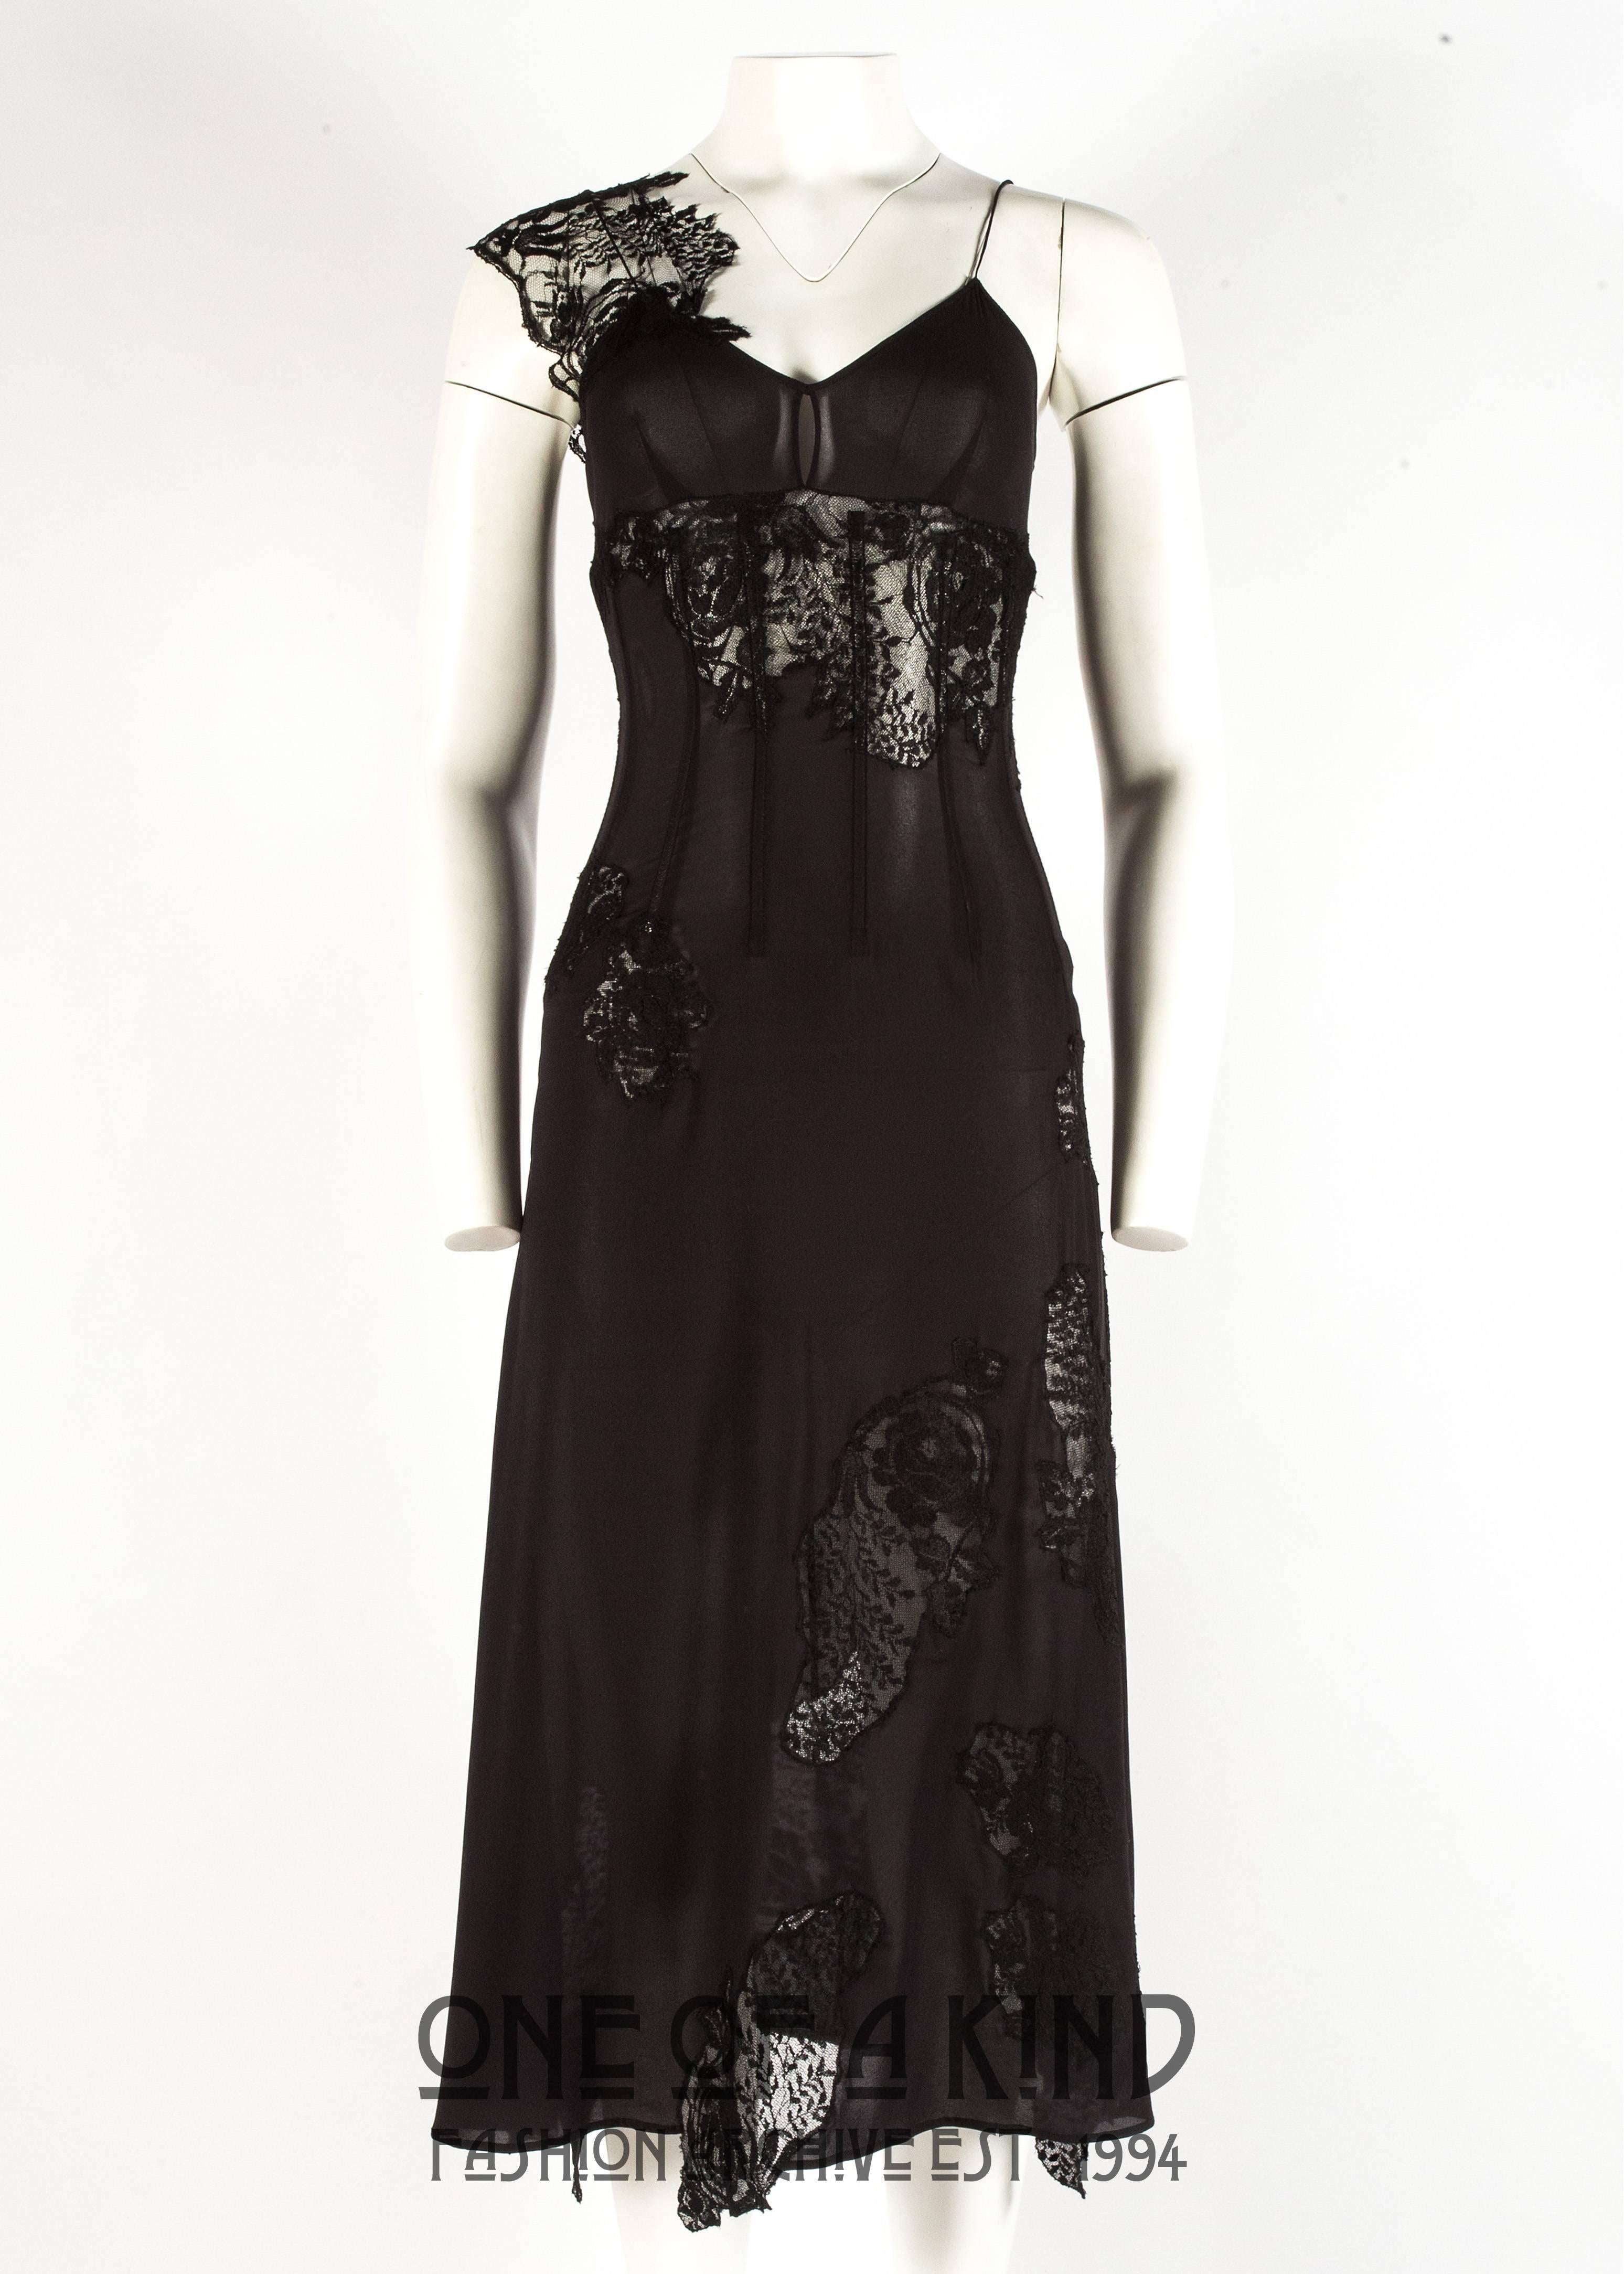 Dolce & Gabbana Spring-Summer 2002 black lace and chiffon corset evening dress